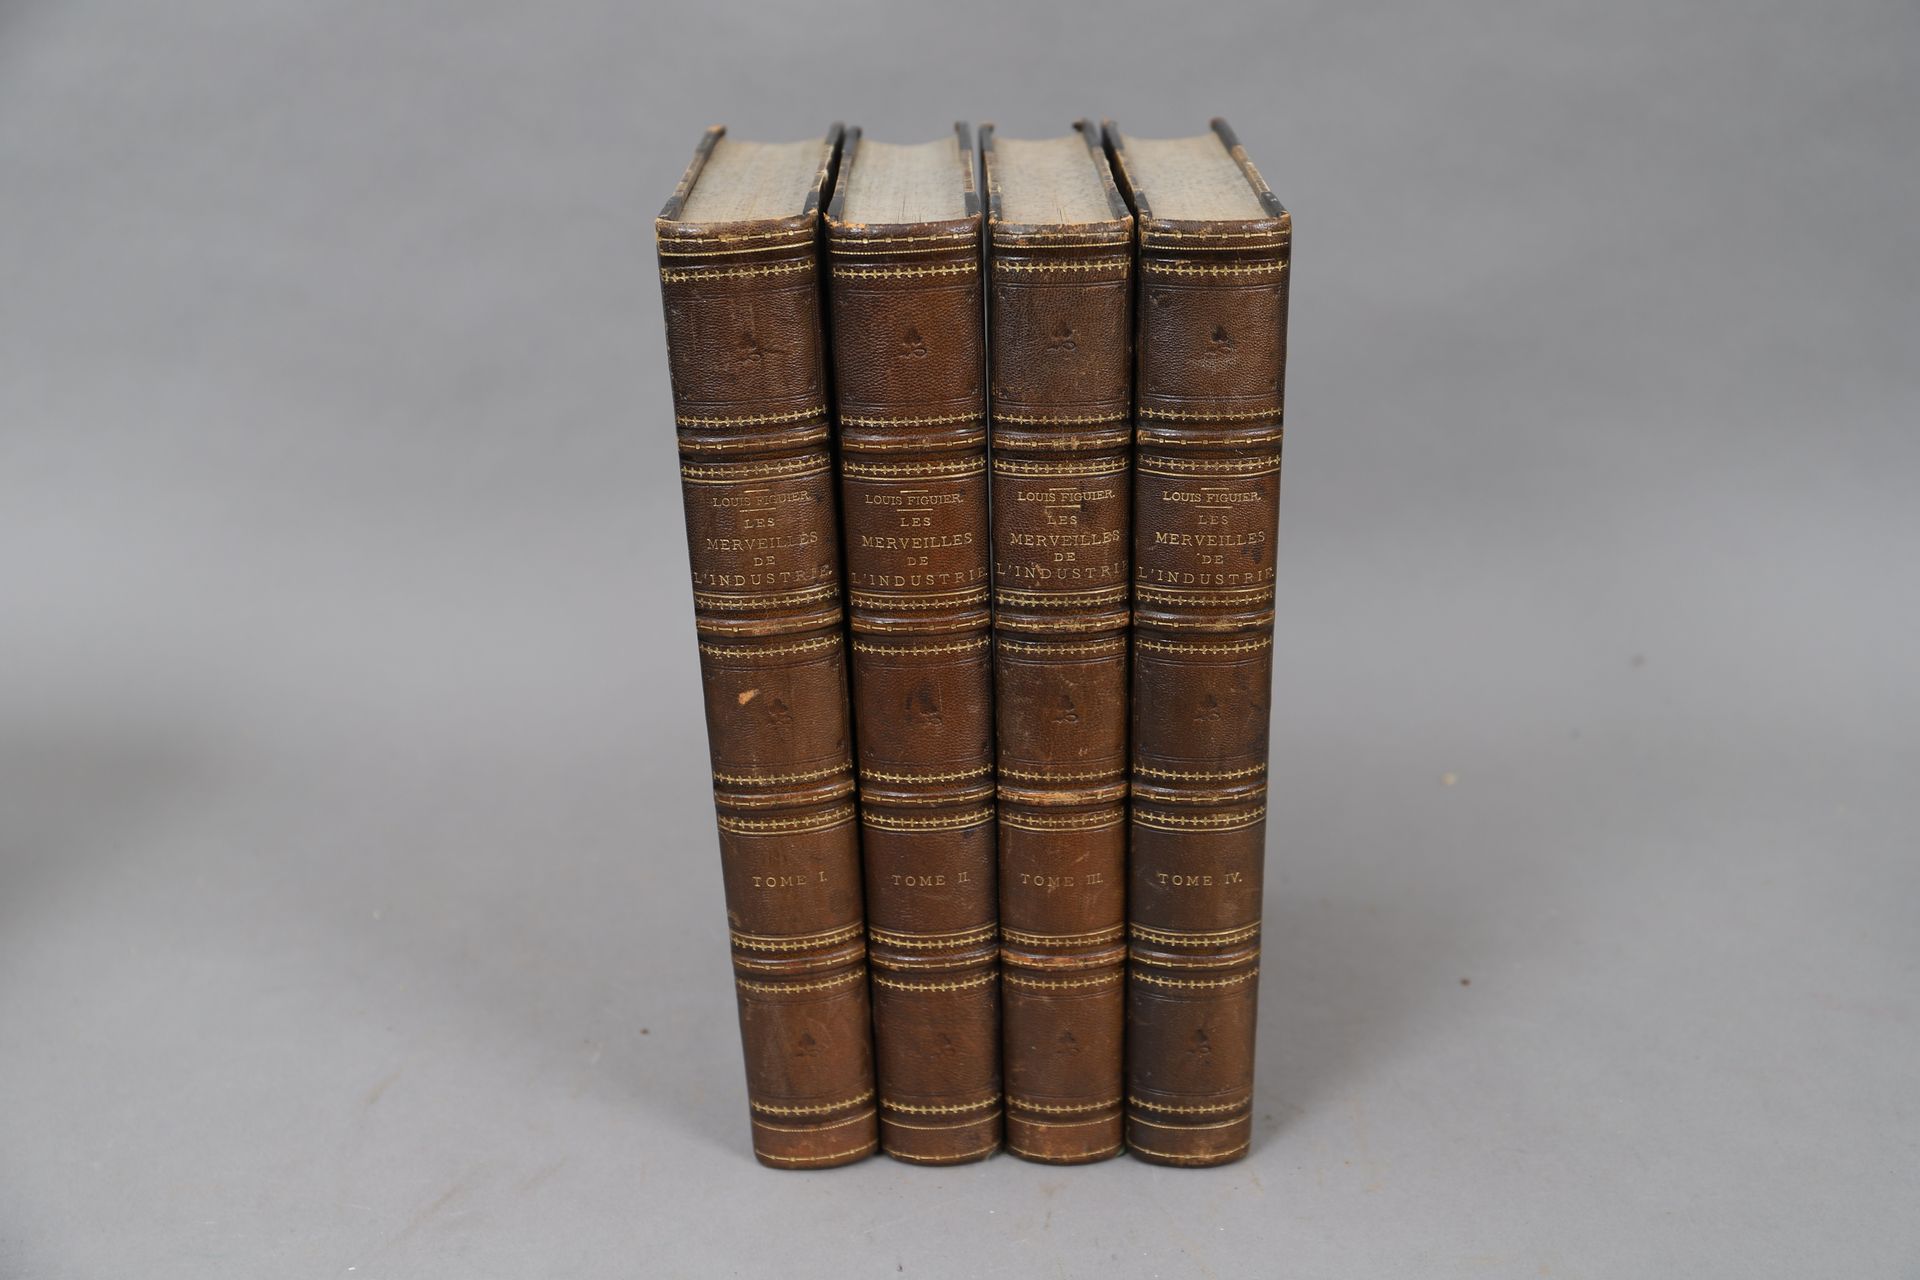 Null FIGUIER - THE WONDERS OF INDUSTRY.

4 bound volumes. (1873-1876).